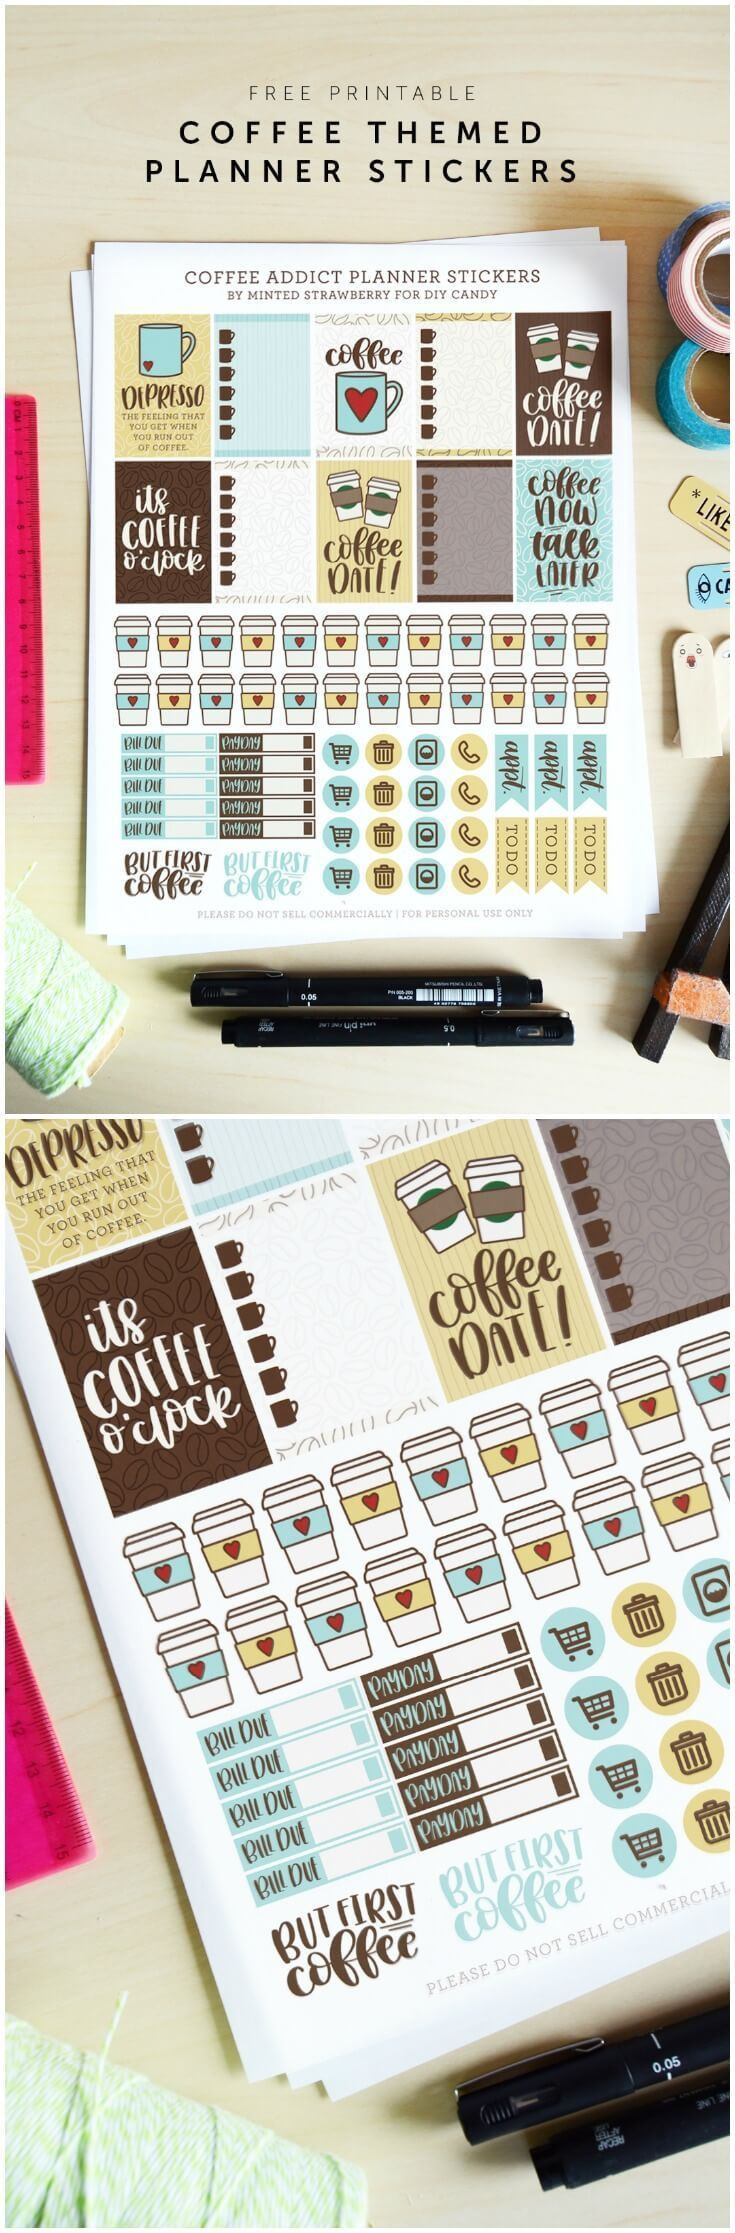 DIY Planner Stickers
 25 best ideas about Planner Stickers on Pinterest